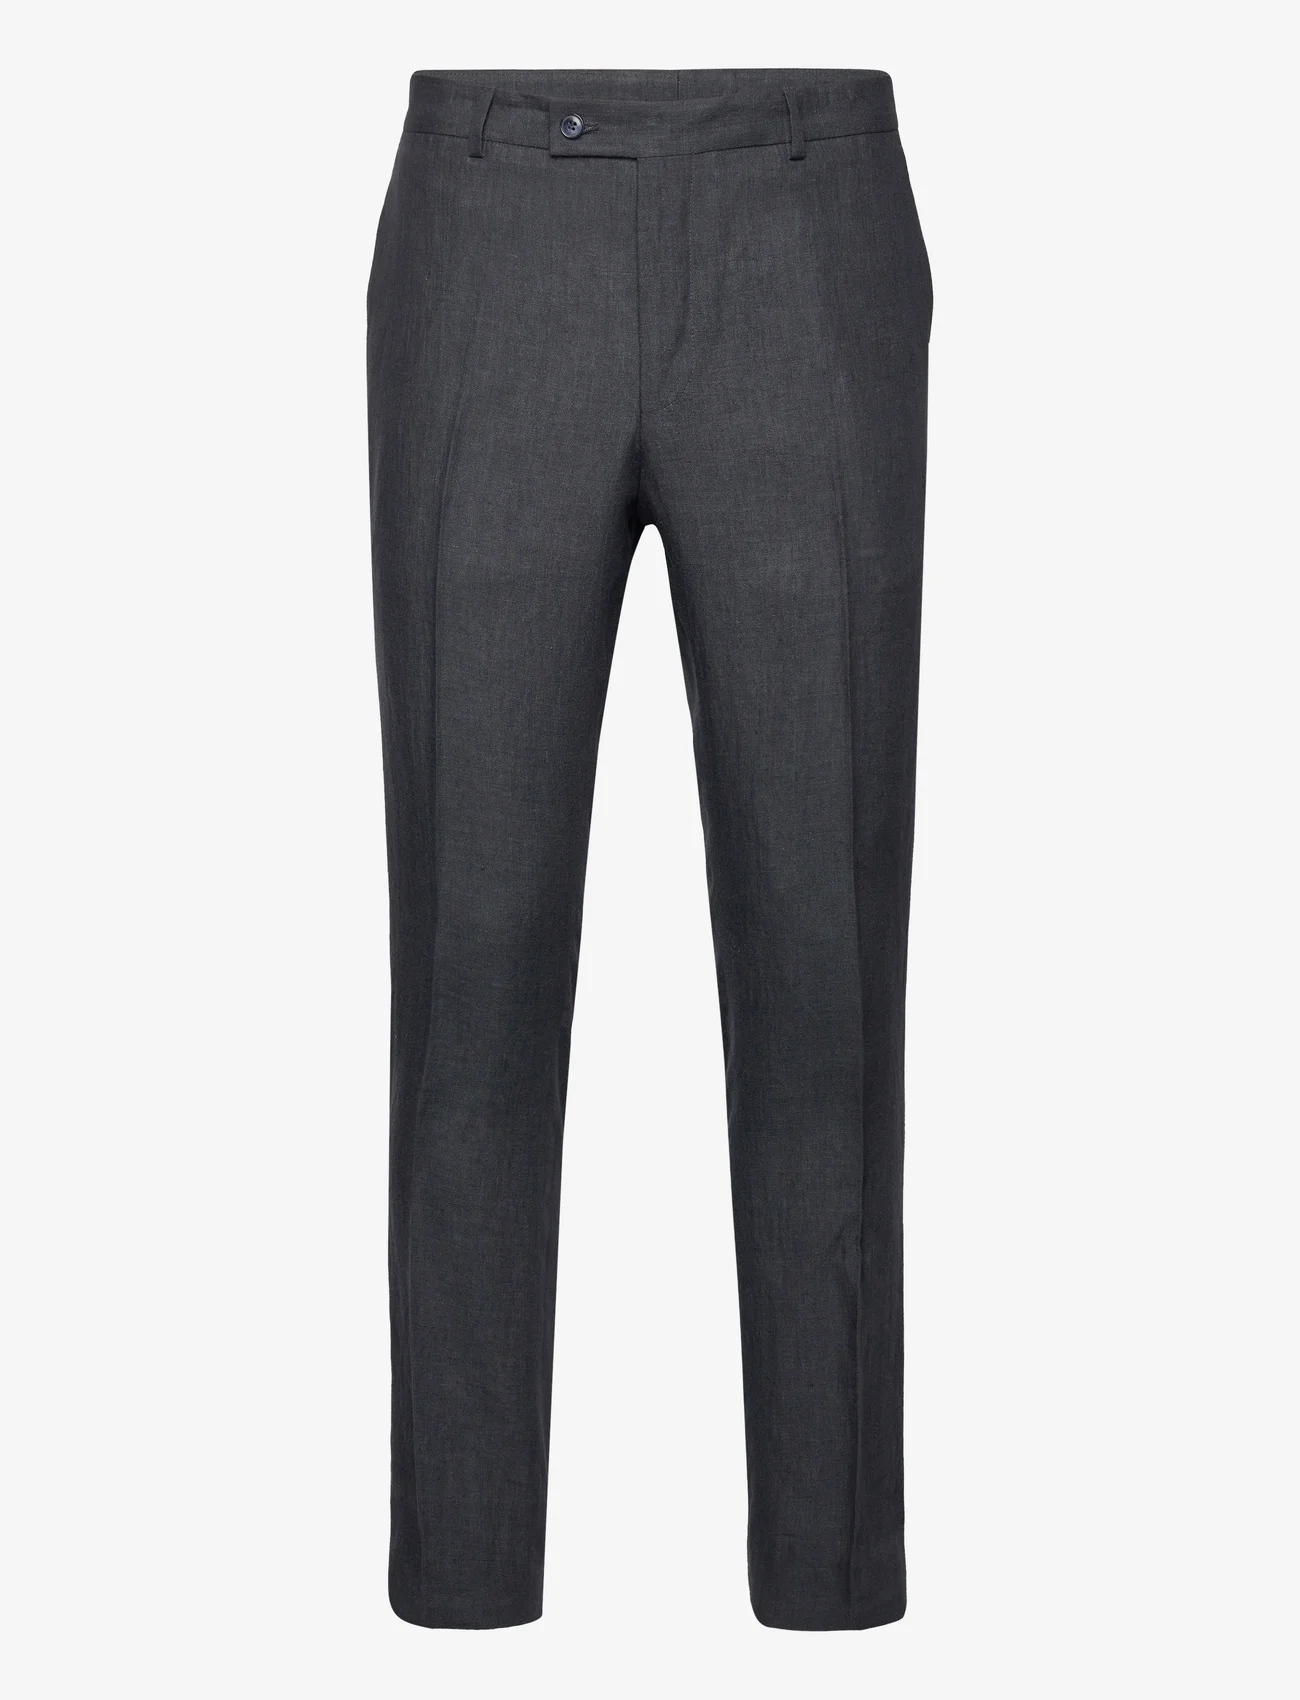 Morris - Bobby Linen Suit Trs - linen trousers - navy - 0